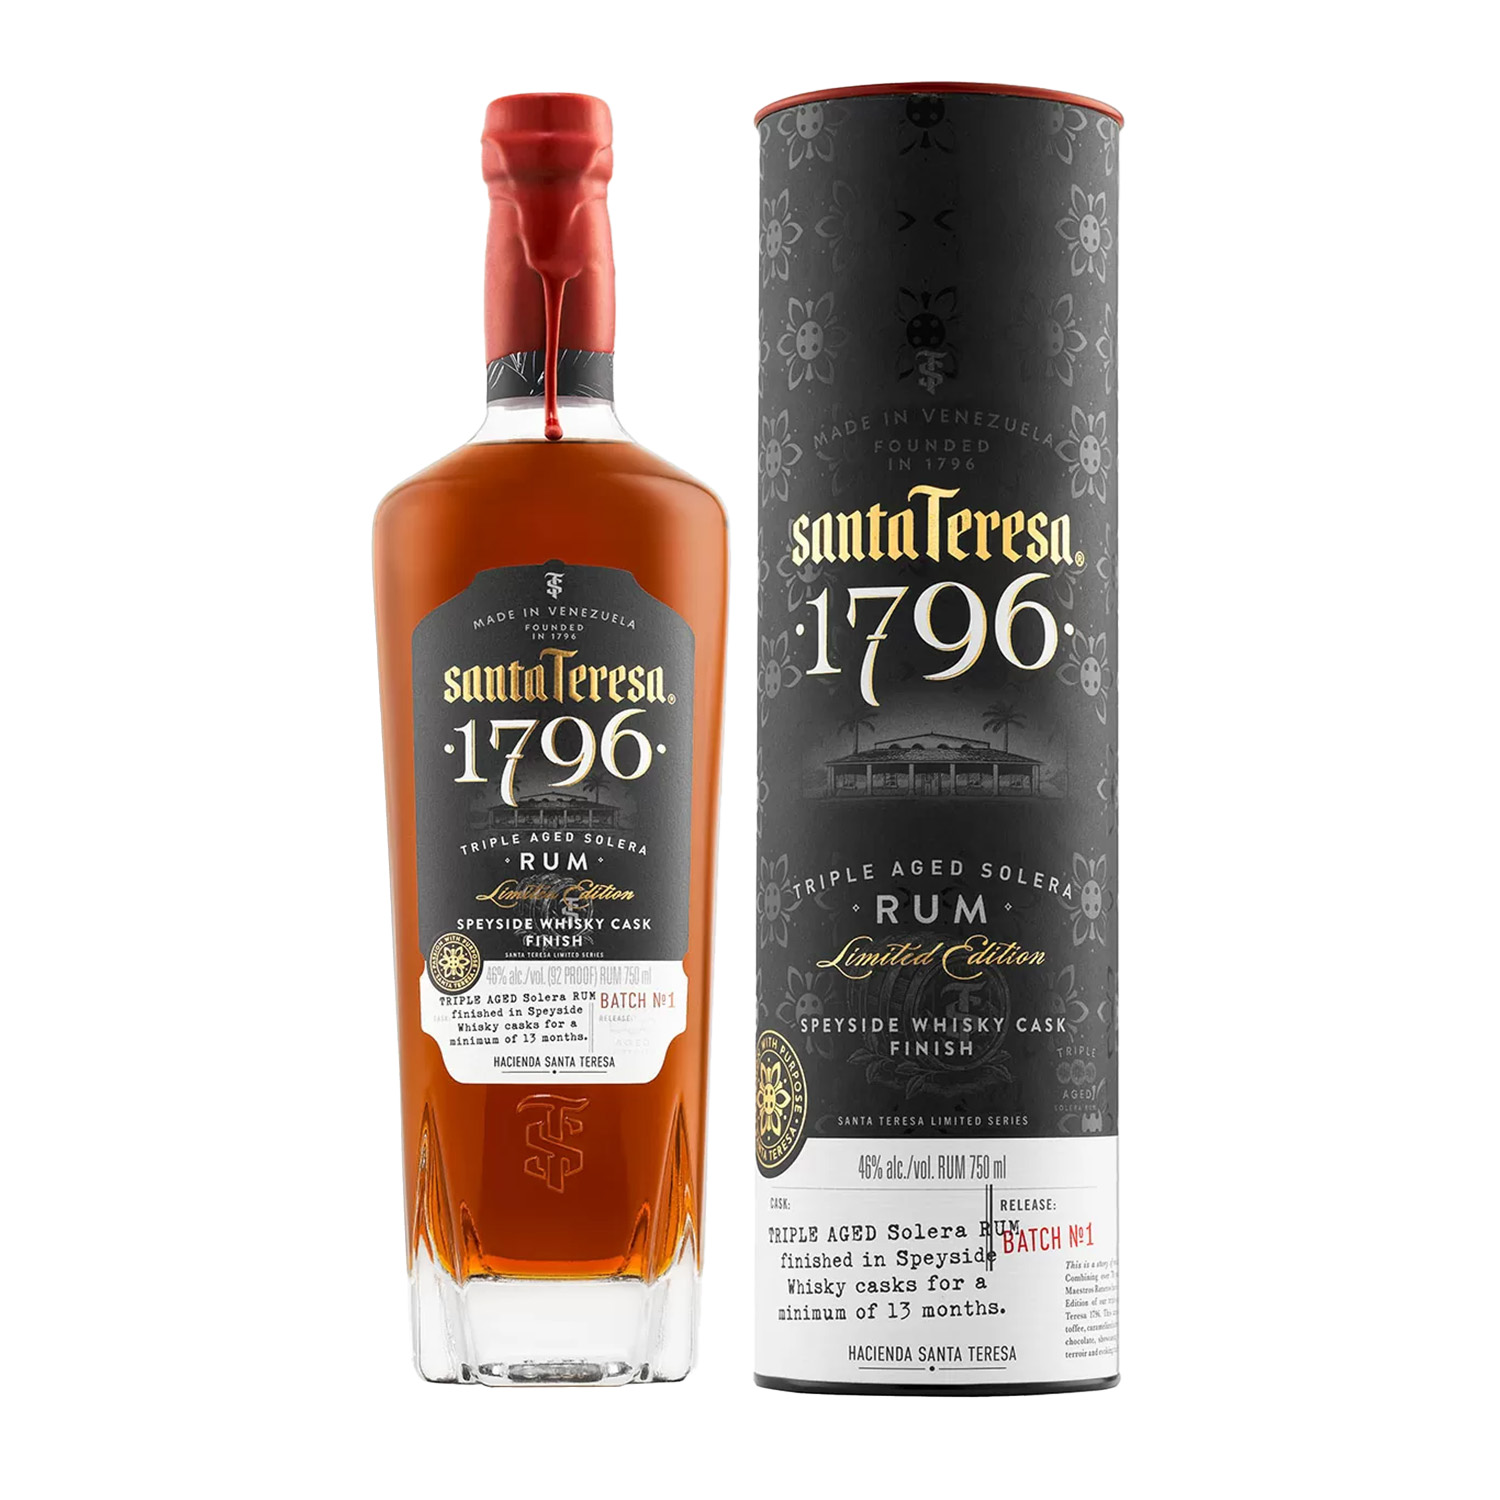 Santa Teresa 1796 Whisky Cask Finish Limited Edition